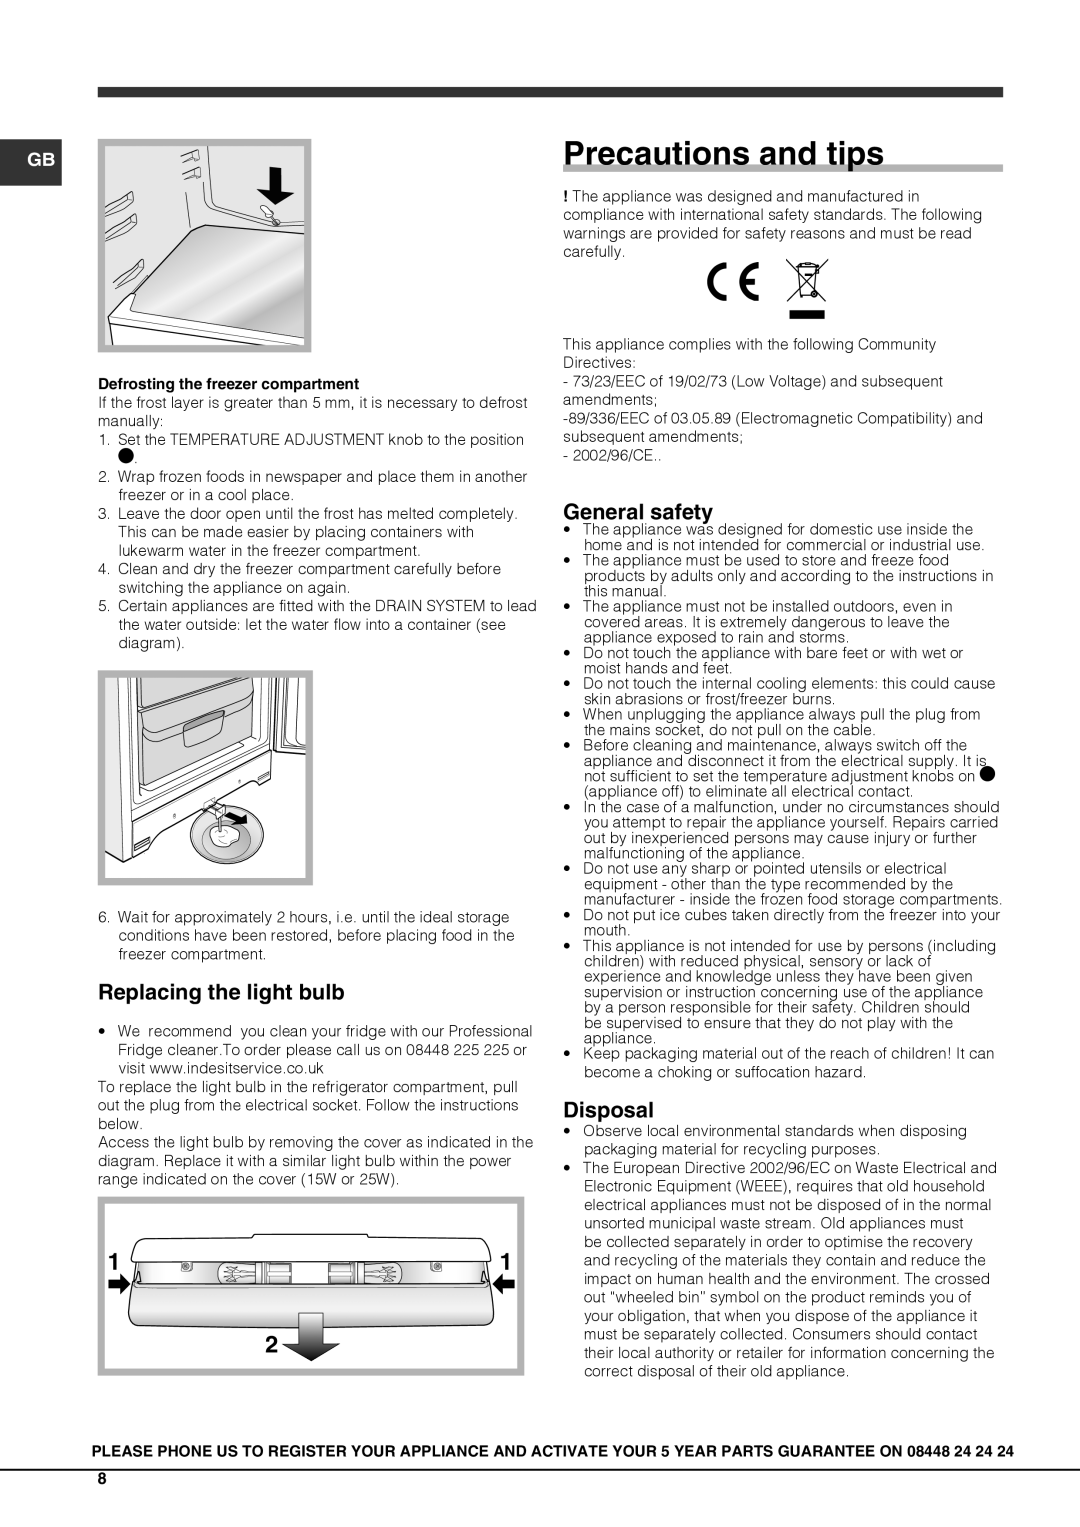 Indesit BIAAA 12 XX (UK), BIAAA 10 XX (UK) manual Precautions and tips, Replacing the light bulb, General safety, Disposal 